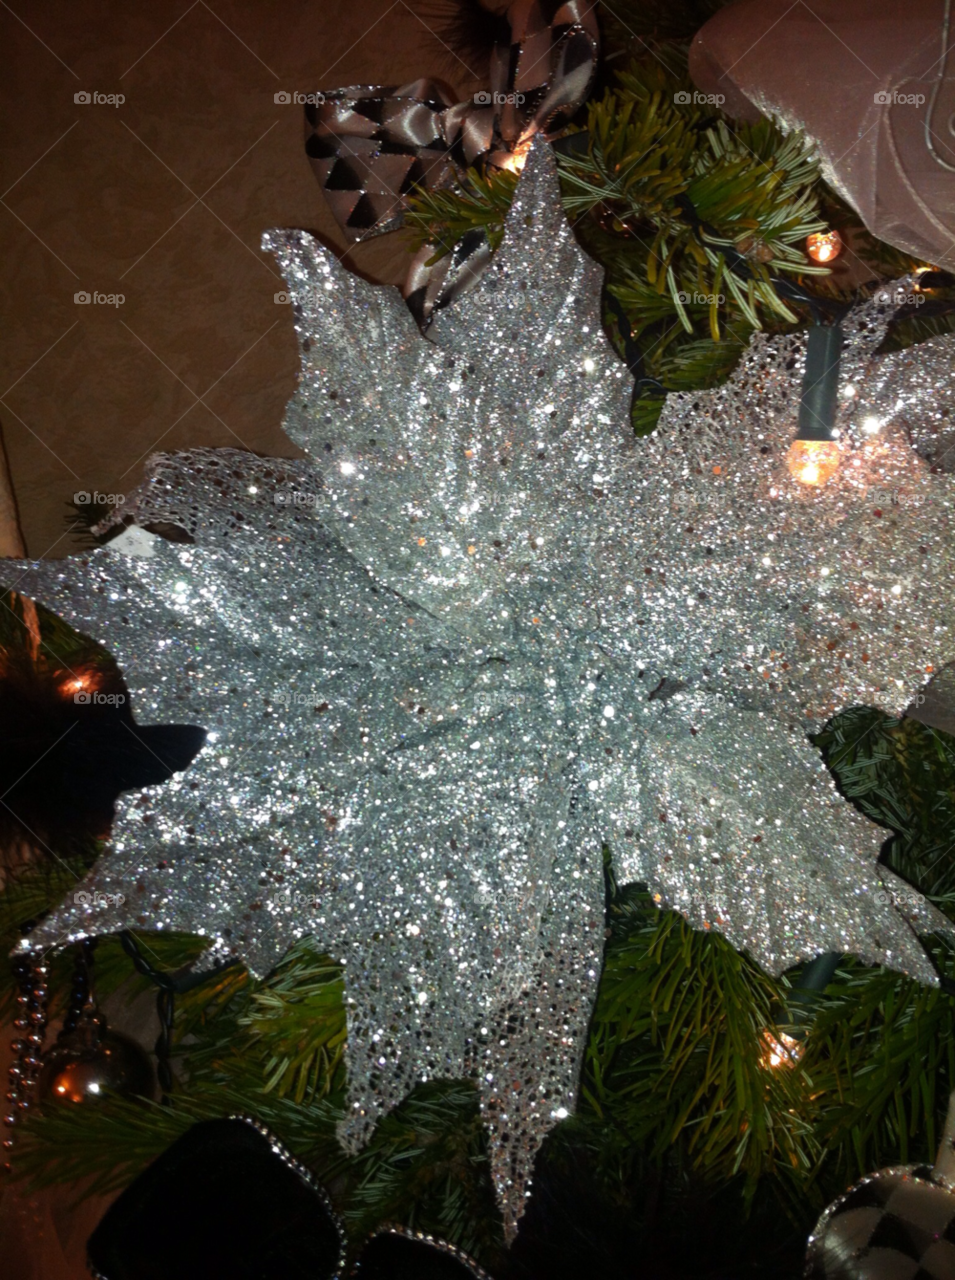 silver leaf on christmas tree is look so beauty full lymm by chocho